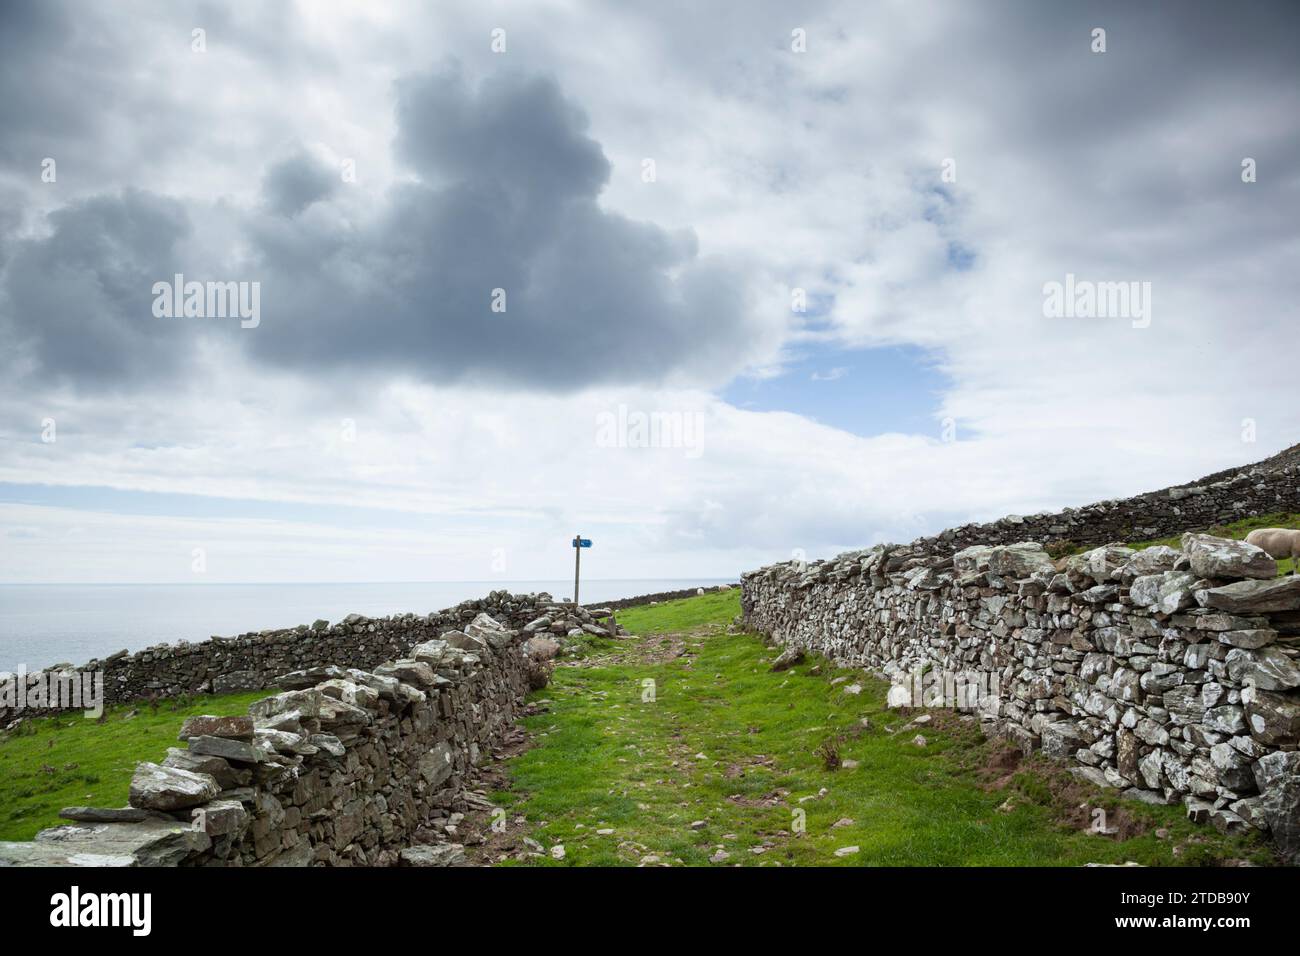 Footpath and dry stone walls. Isle of Man, UK. Stock Photo